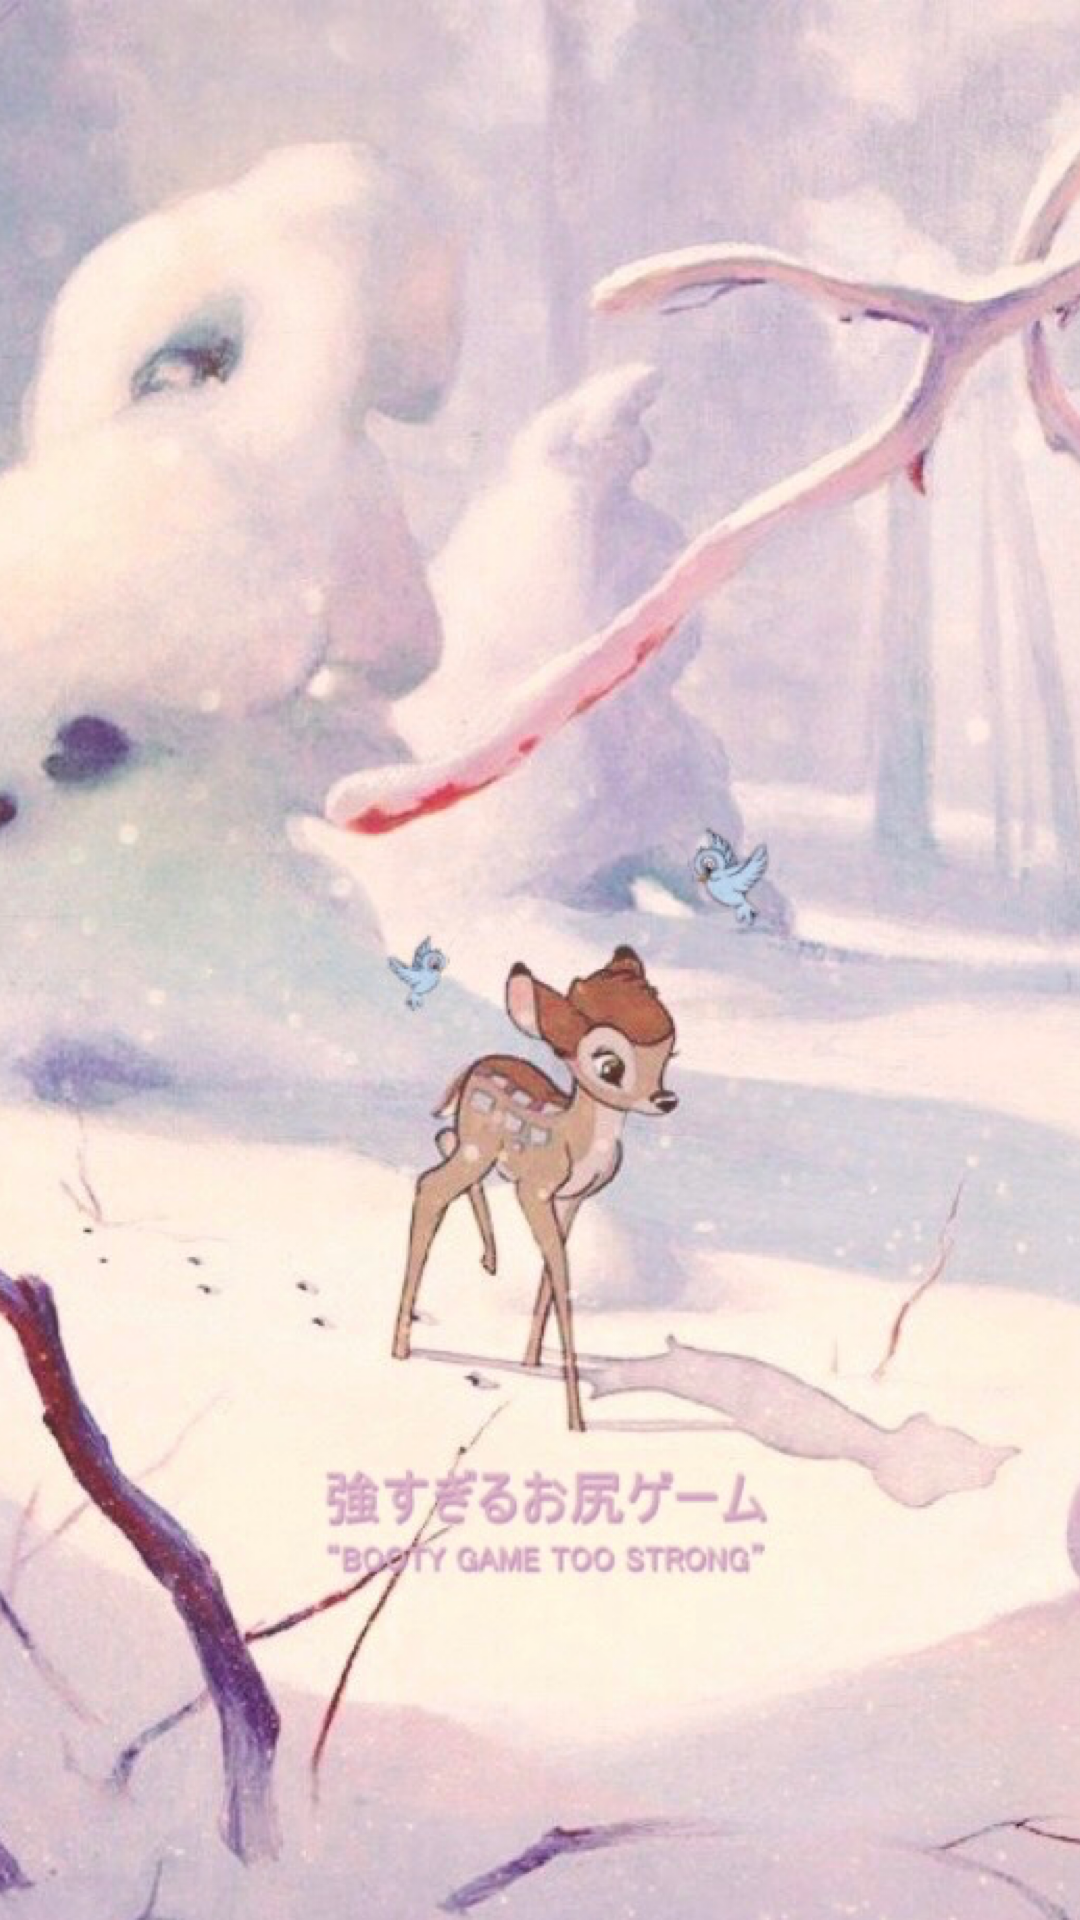 Bambi wallpaper. Disney aesthetic, Disney wallpaper, Cartoon wallpaper